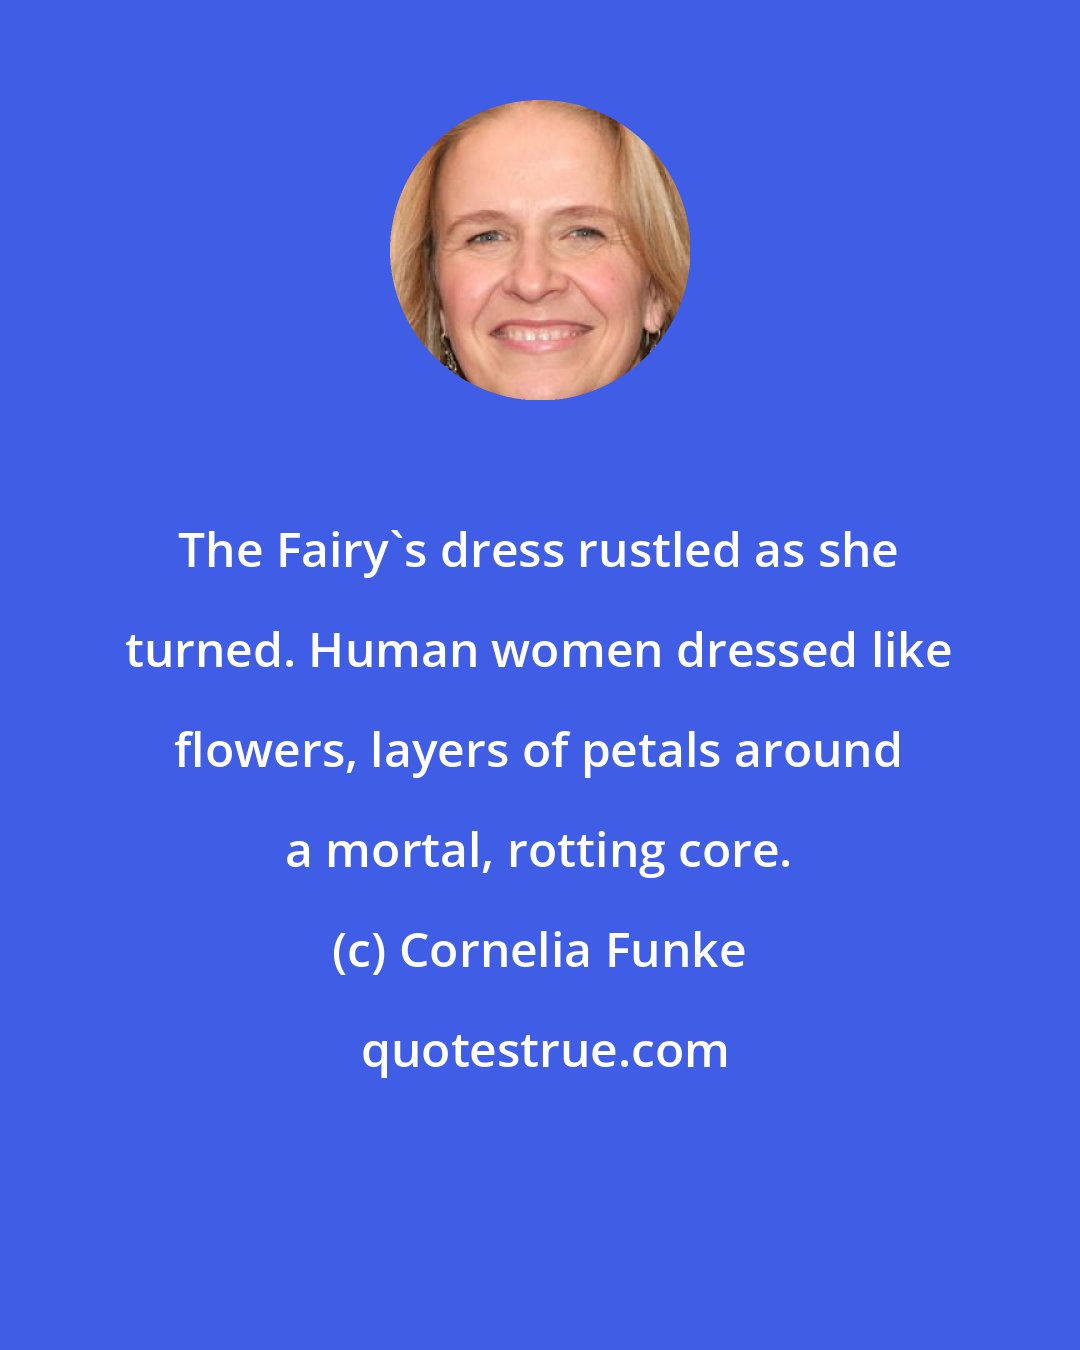 Cornelia Funke: The Fairy's dress rustled as she turned. Human women dressed like flowers, layers of petals around a mortal, rotting core.